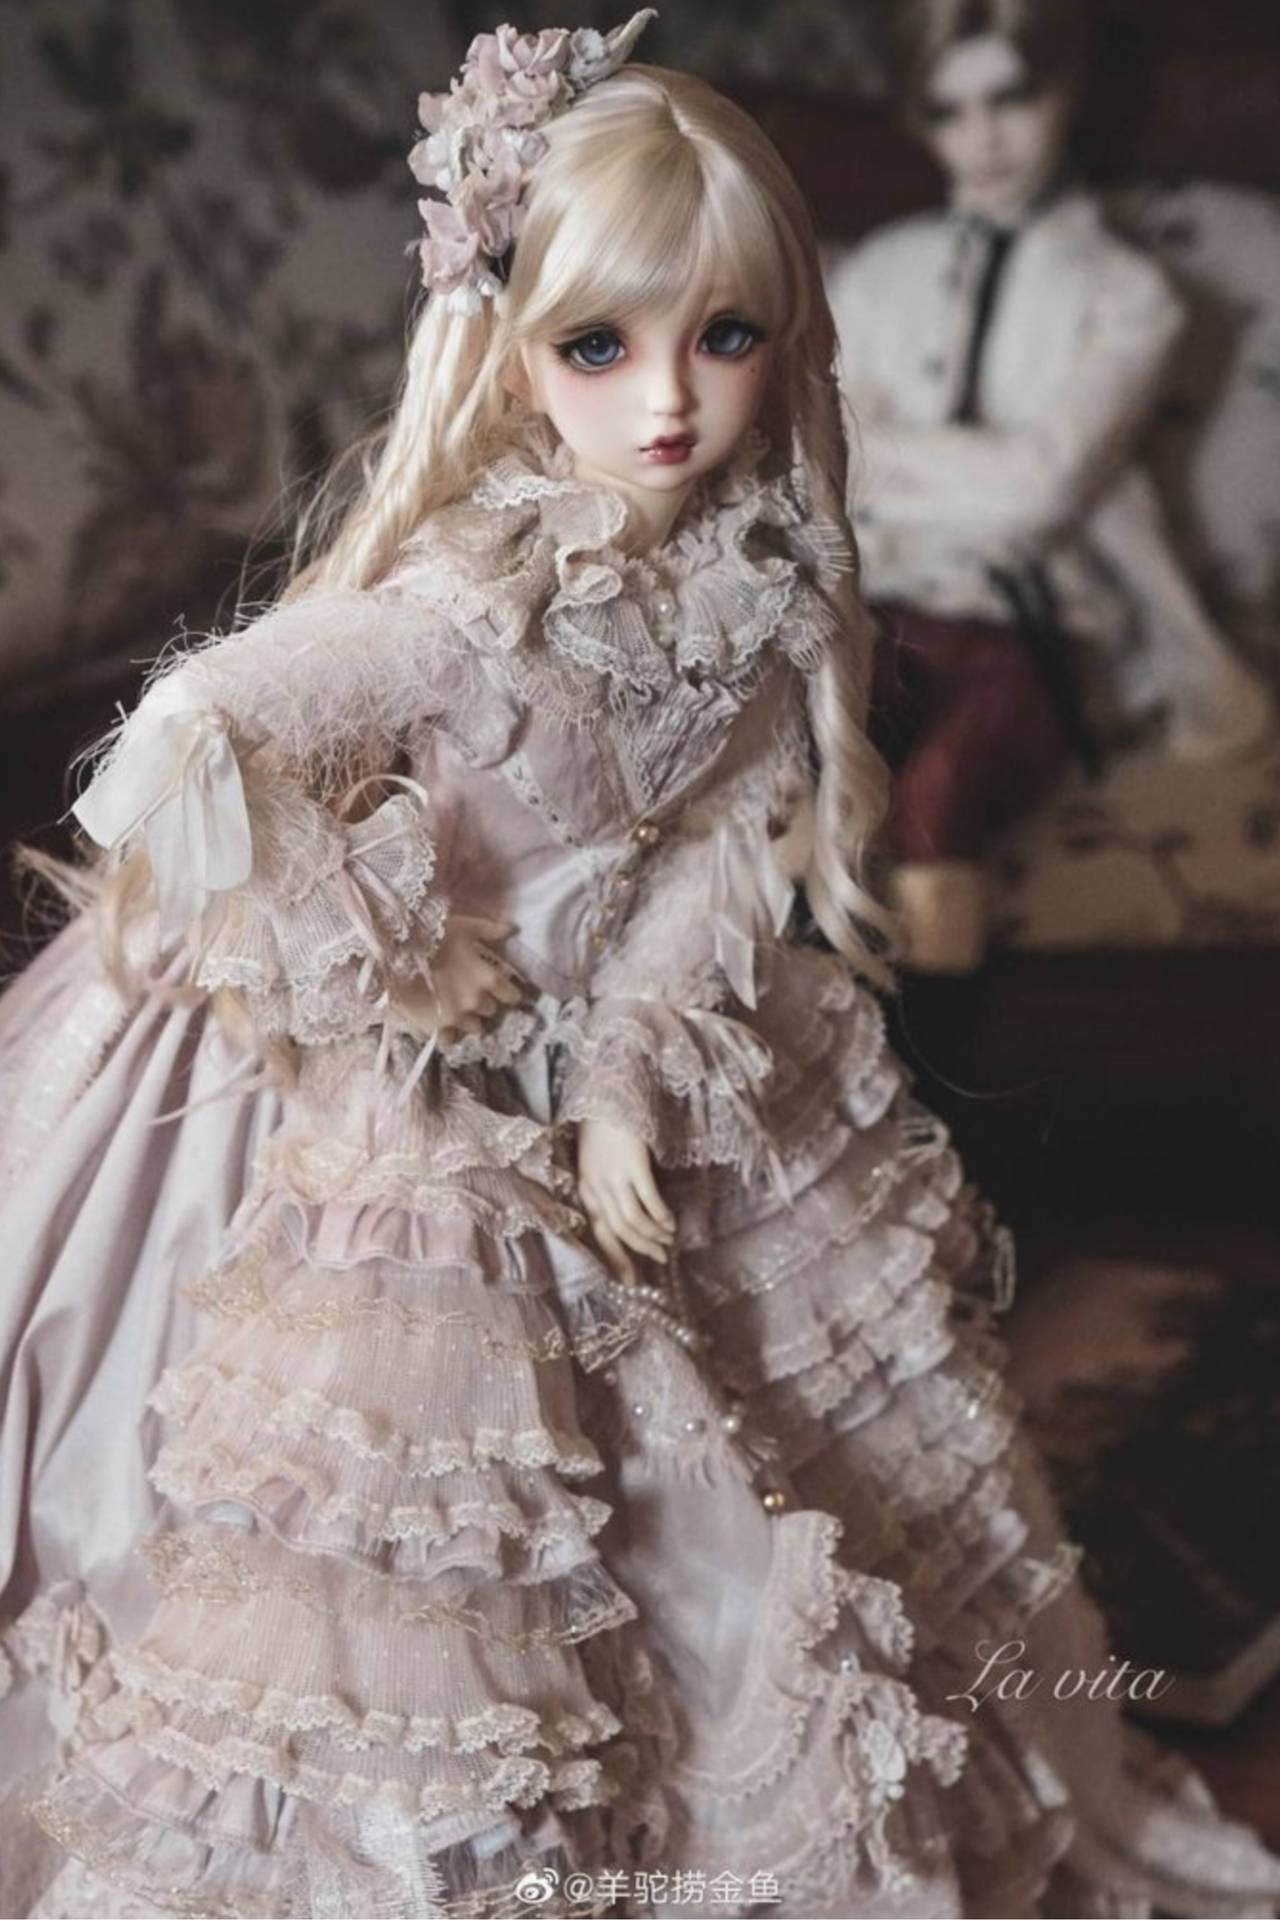 Caption: Elegant European Ball Gown on Barbie Doll Wallpaper